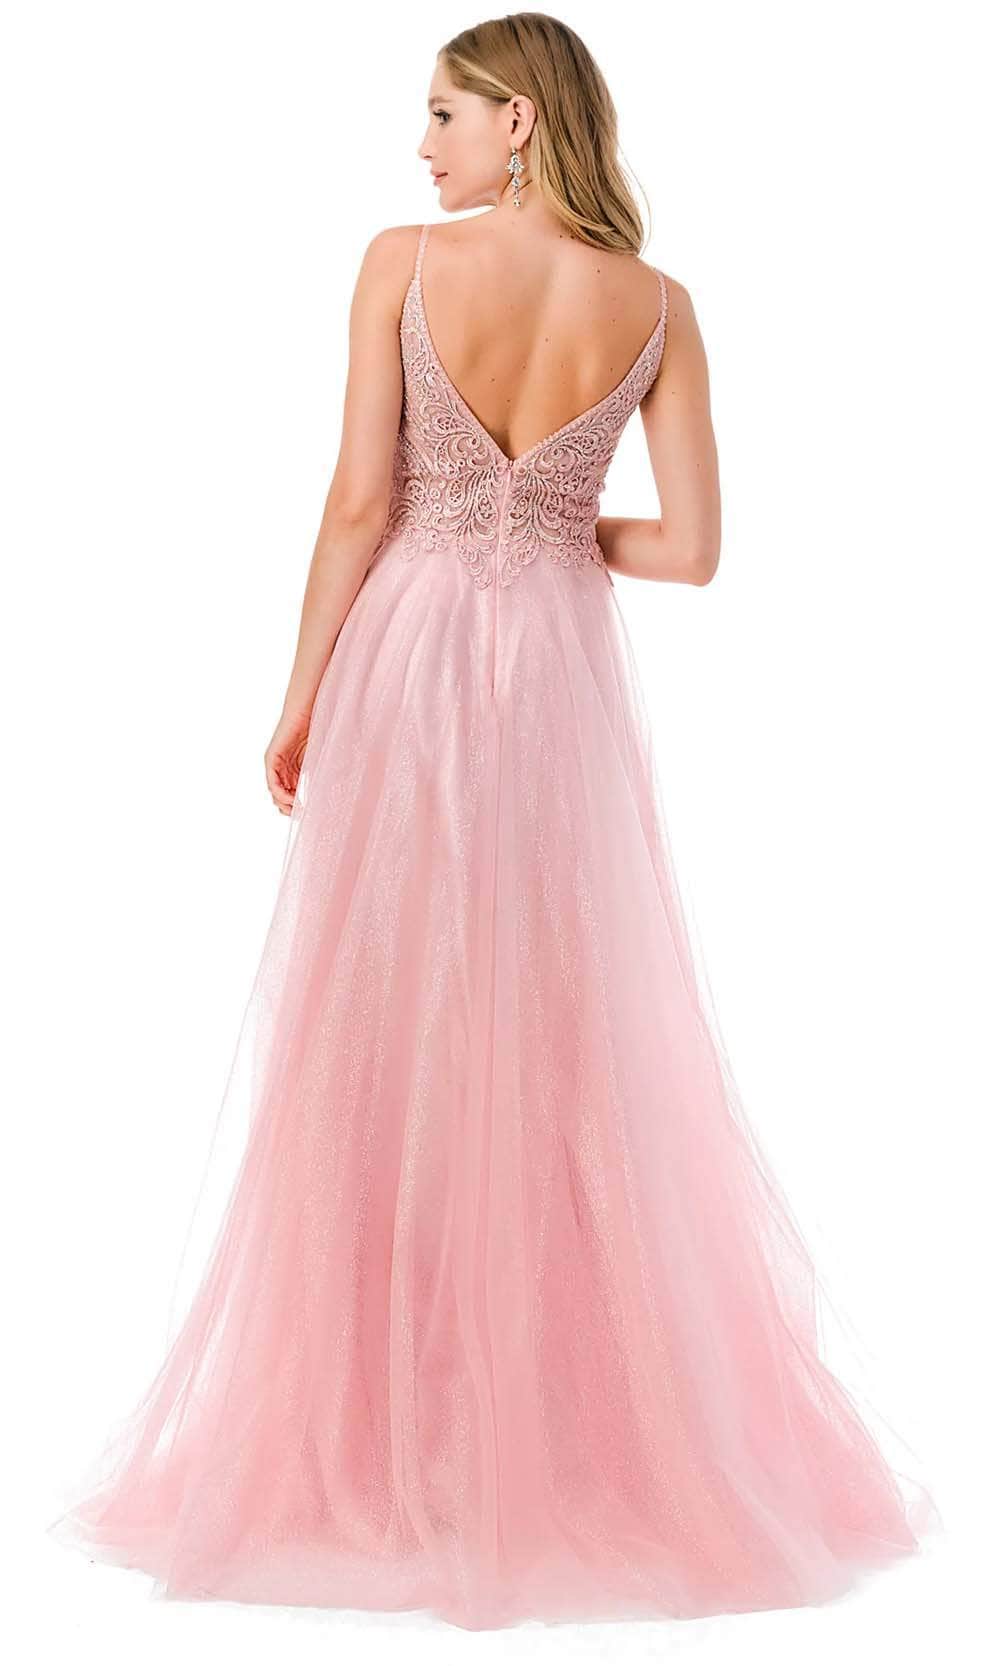 Aspeed Design L2688 - Spaghetti Straps Tulle Prom Dress